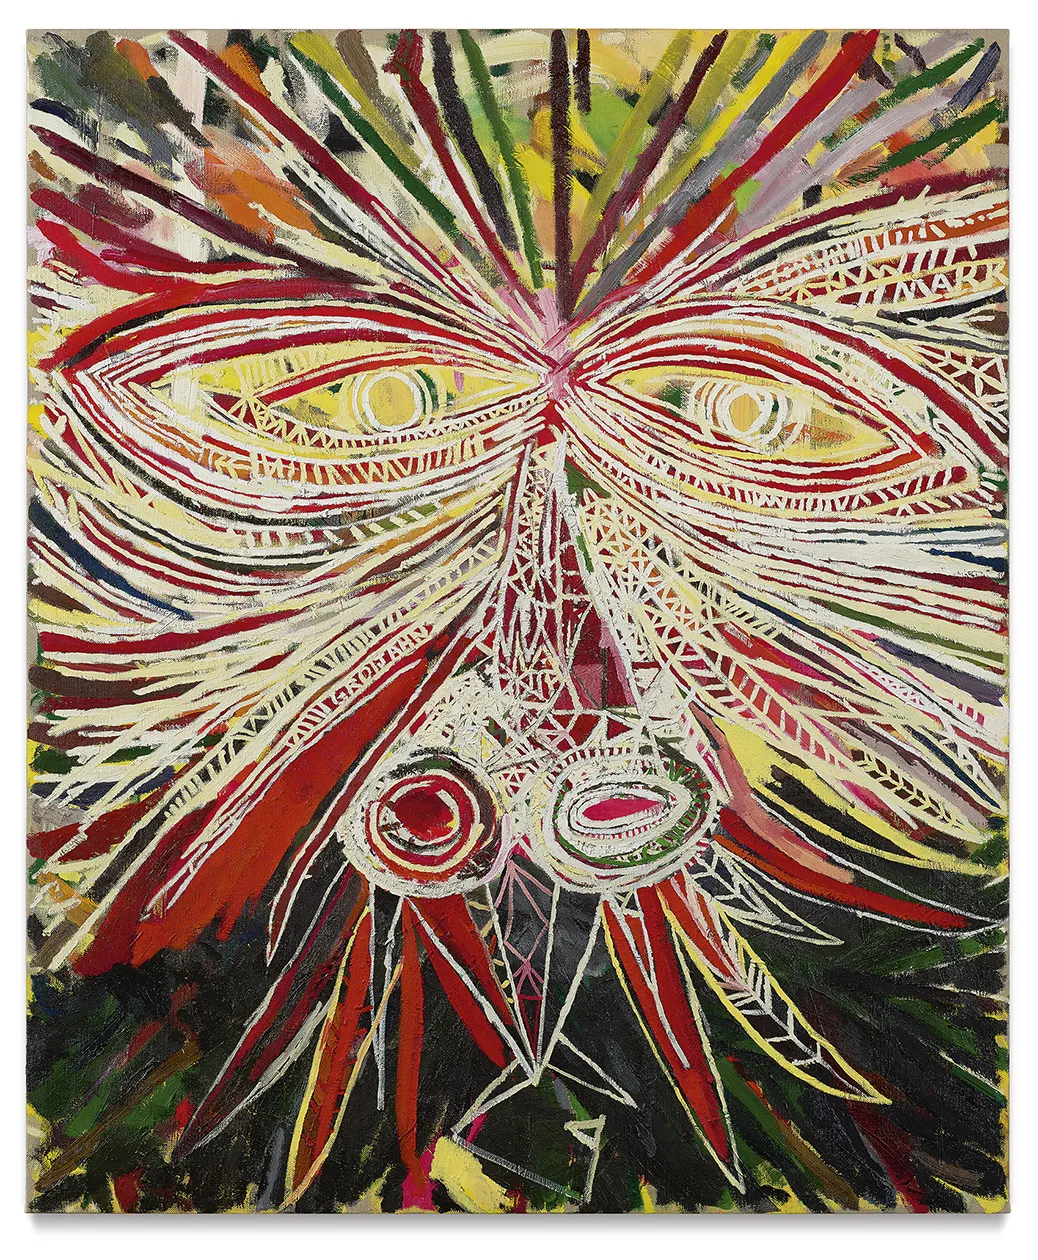 Mark Grotjahn - Face No. 1, 2004, oil on canvas